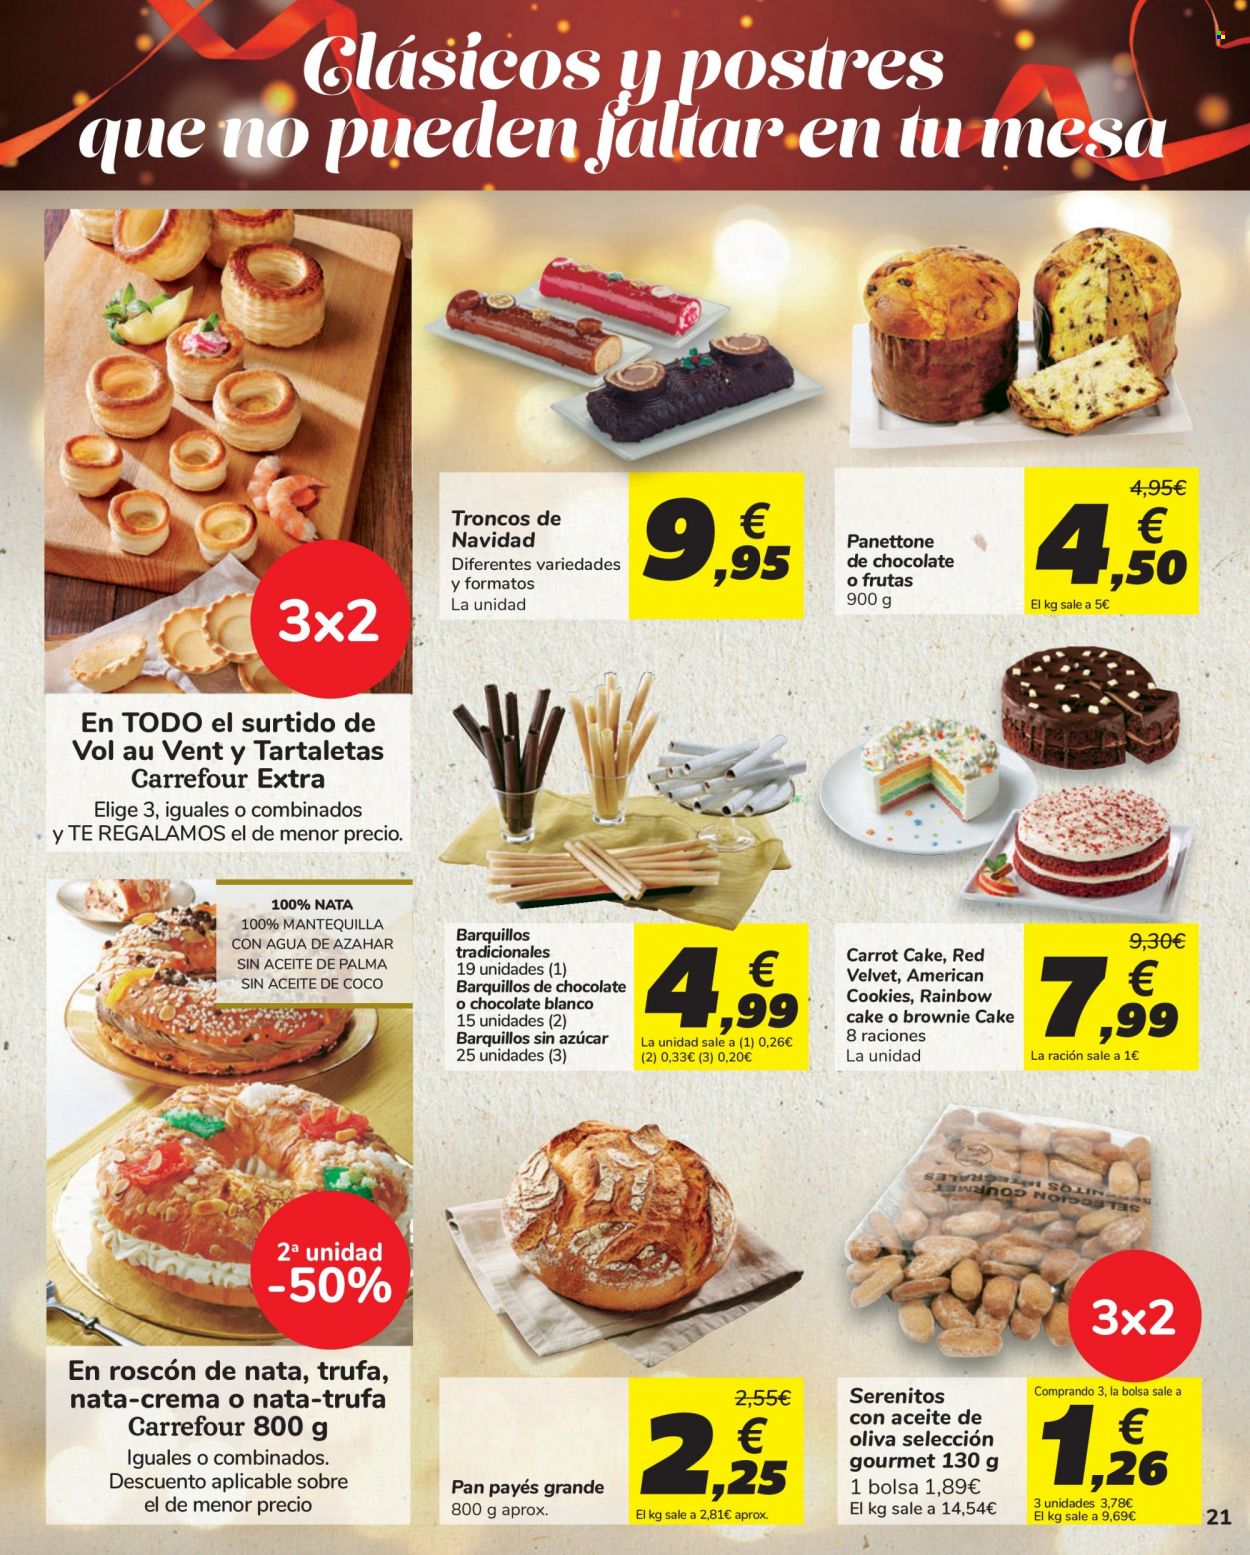 thumbnail - Folleto actual Carrefour - 15/12/21 - 31/12/21 - Ventas - pan, barquillos, brownie, panettone, roscón, postre, cookies, trufa. Página 21.